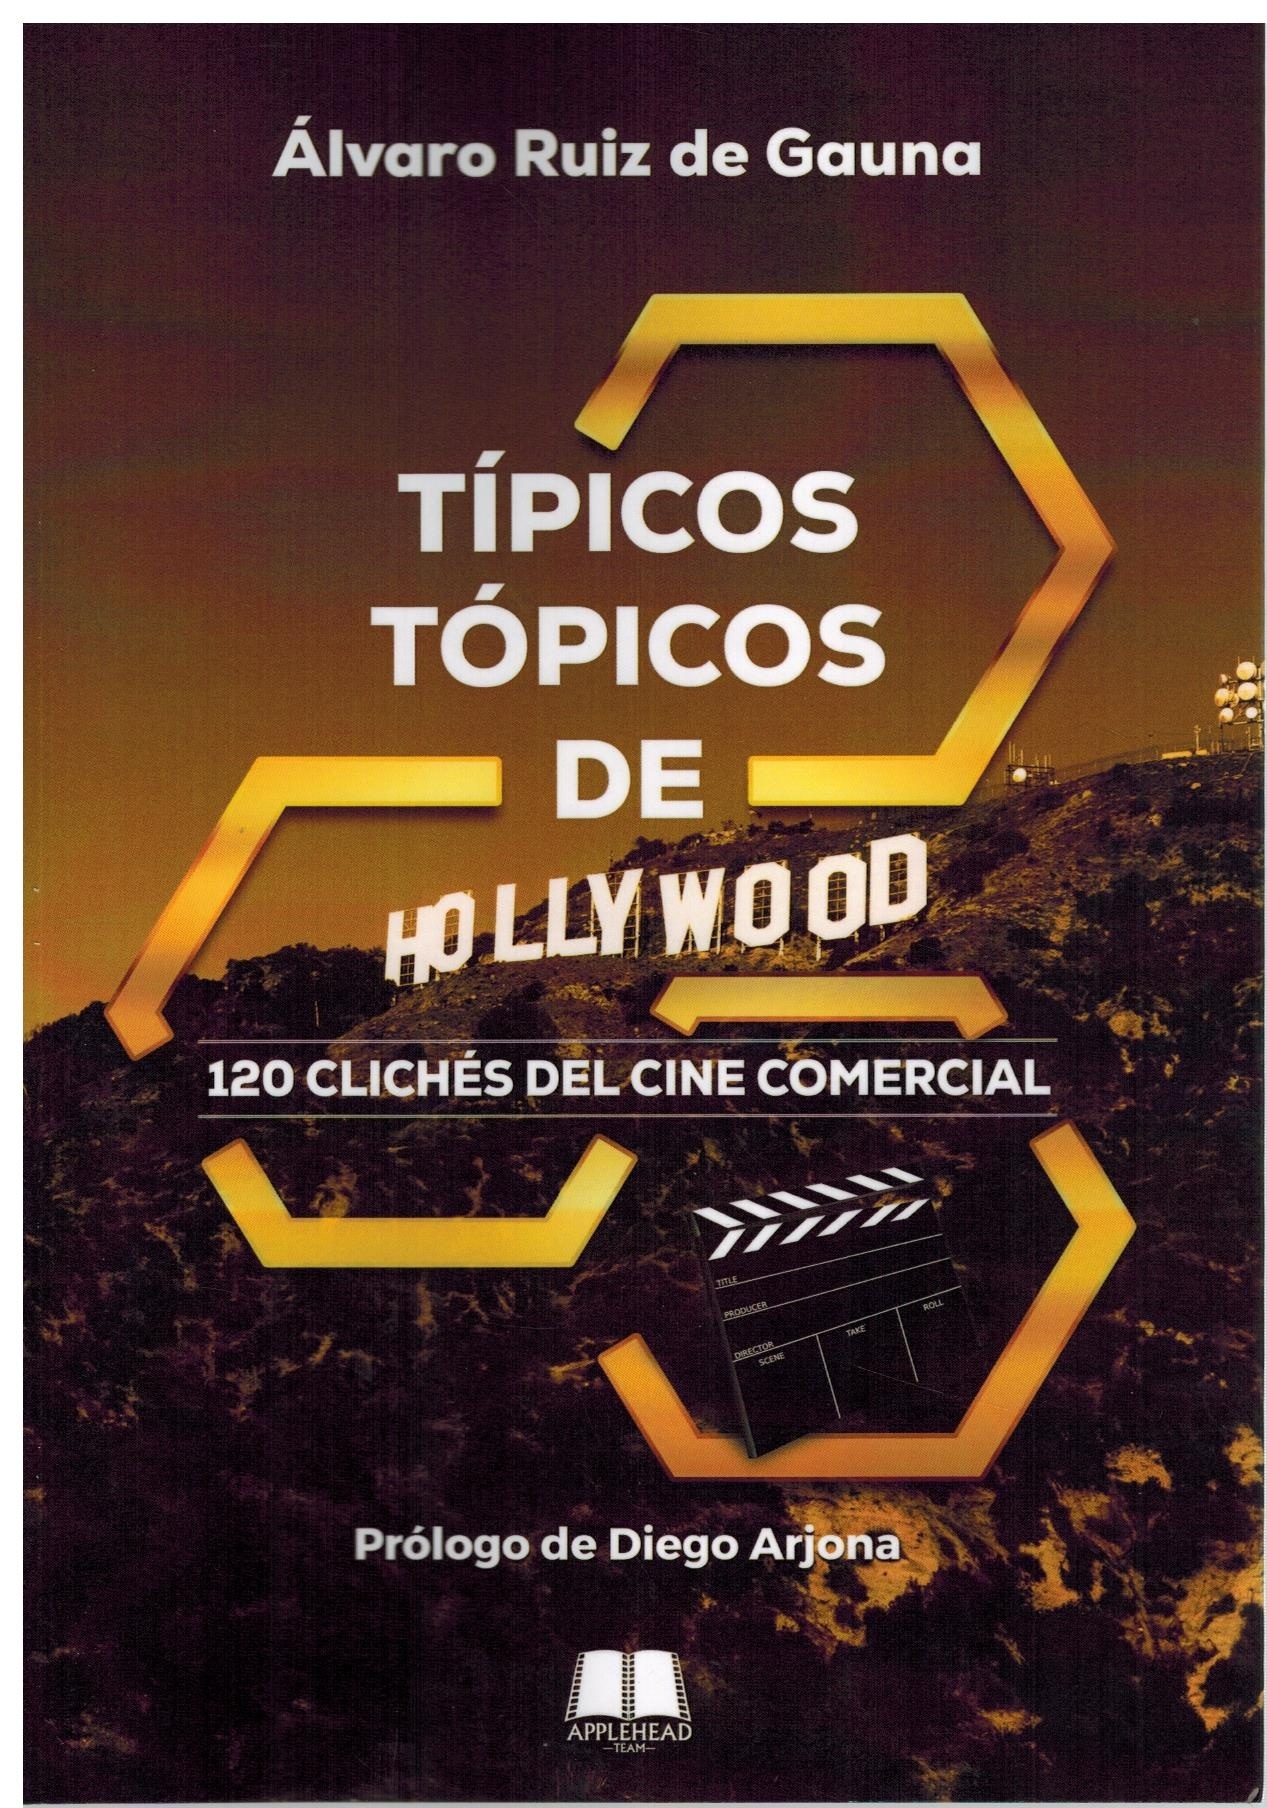 Típicos tópicos de Hollywood. 120 clichés del cine comercial